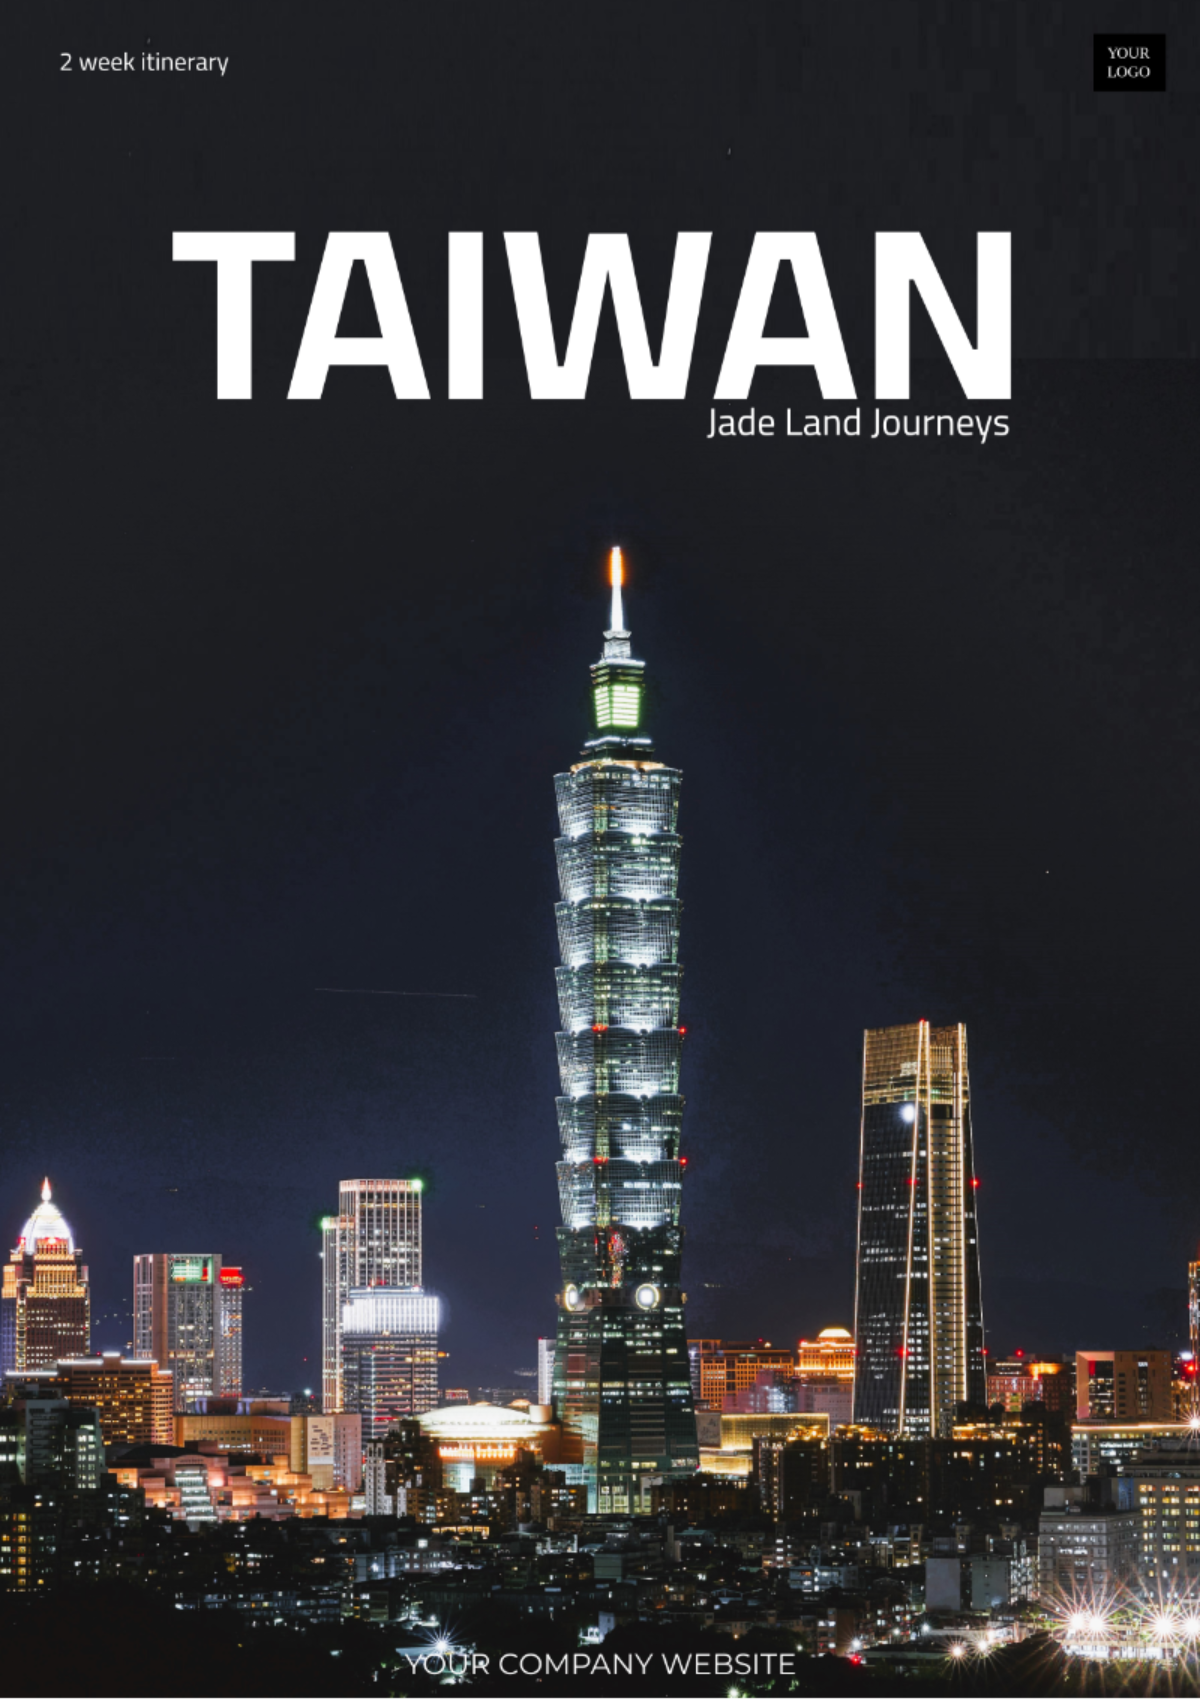 2 Week Taiwan Itinerary Template